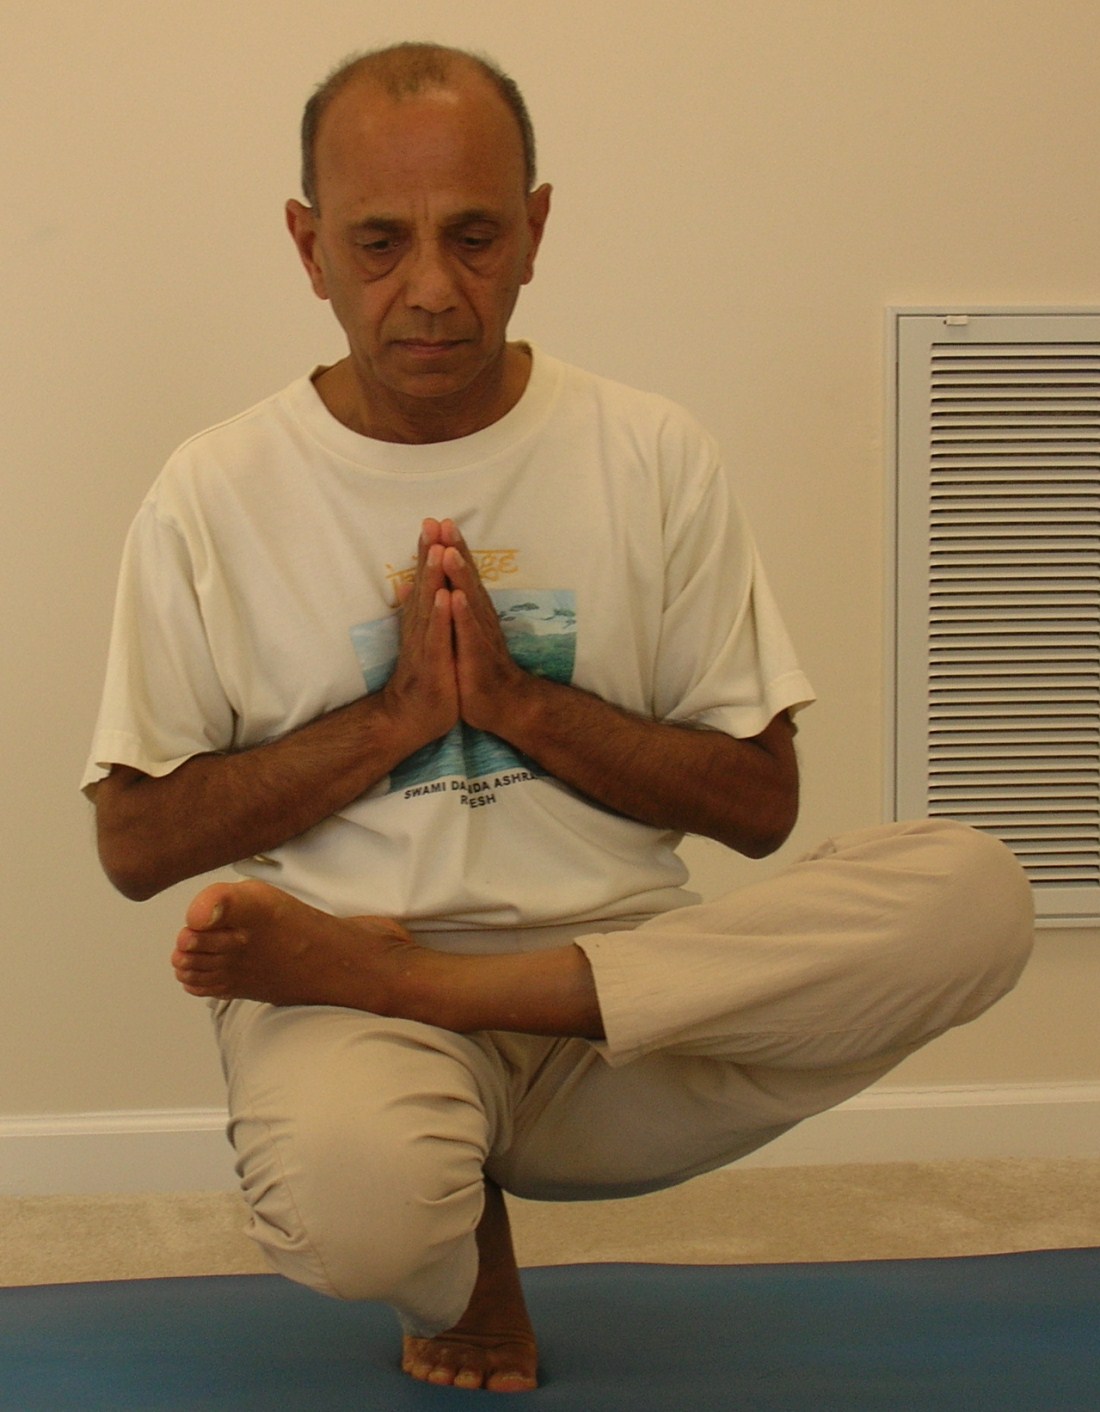 Yoga Integral  YOGA Balance & Healthy